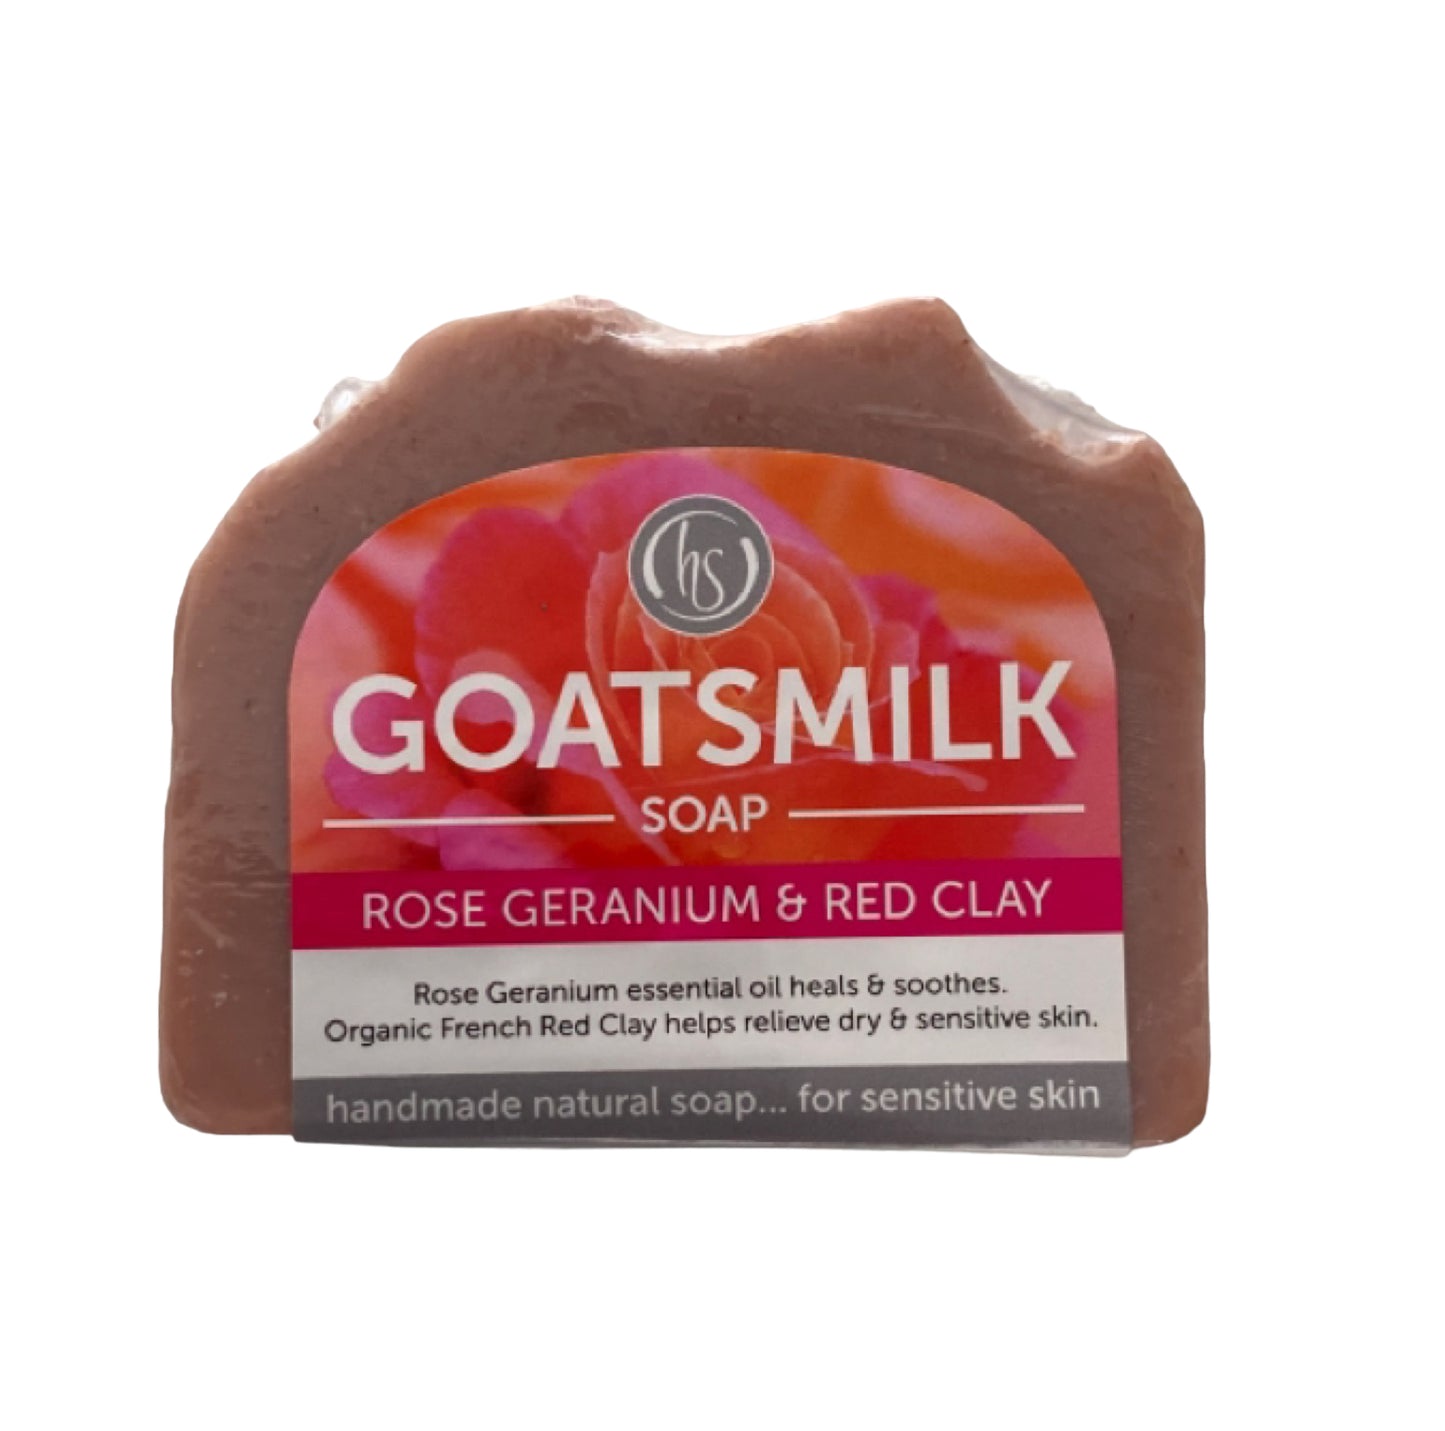 Garden Believe Gardener Stone Goatmilk Soap Gift - The Renmy Store Homewares & Gifts 